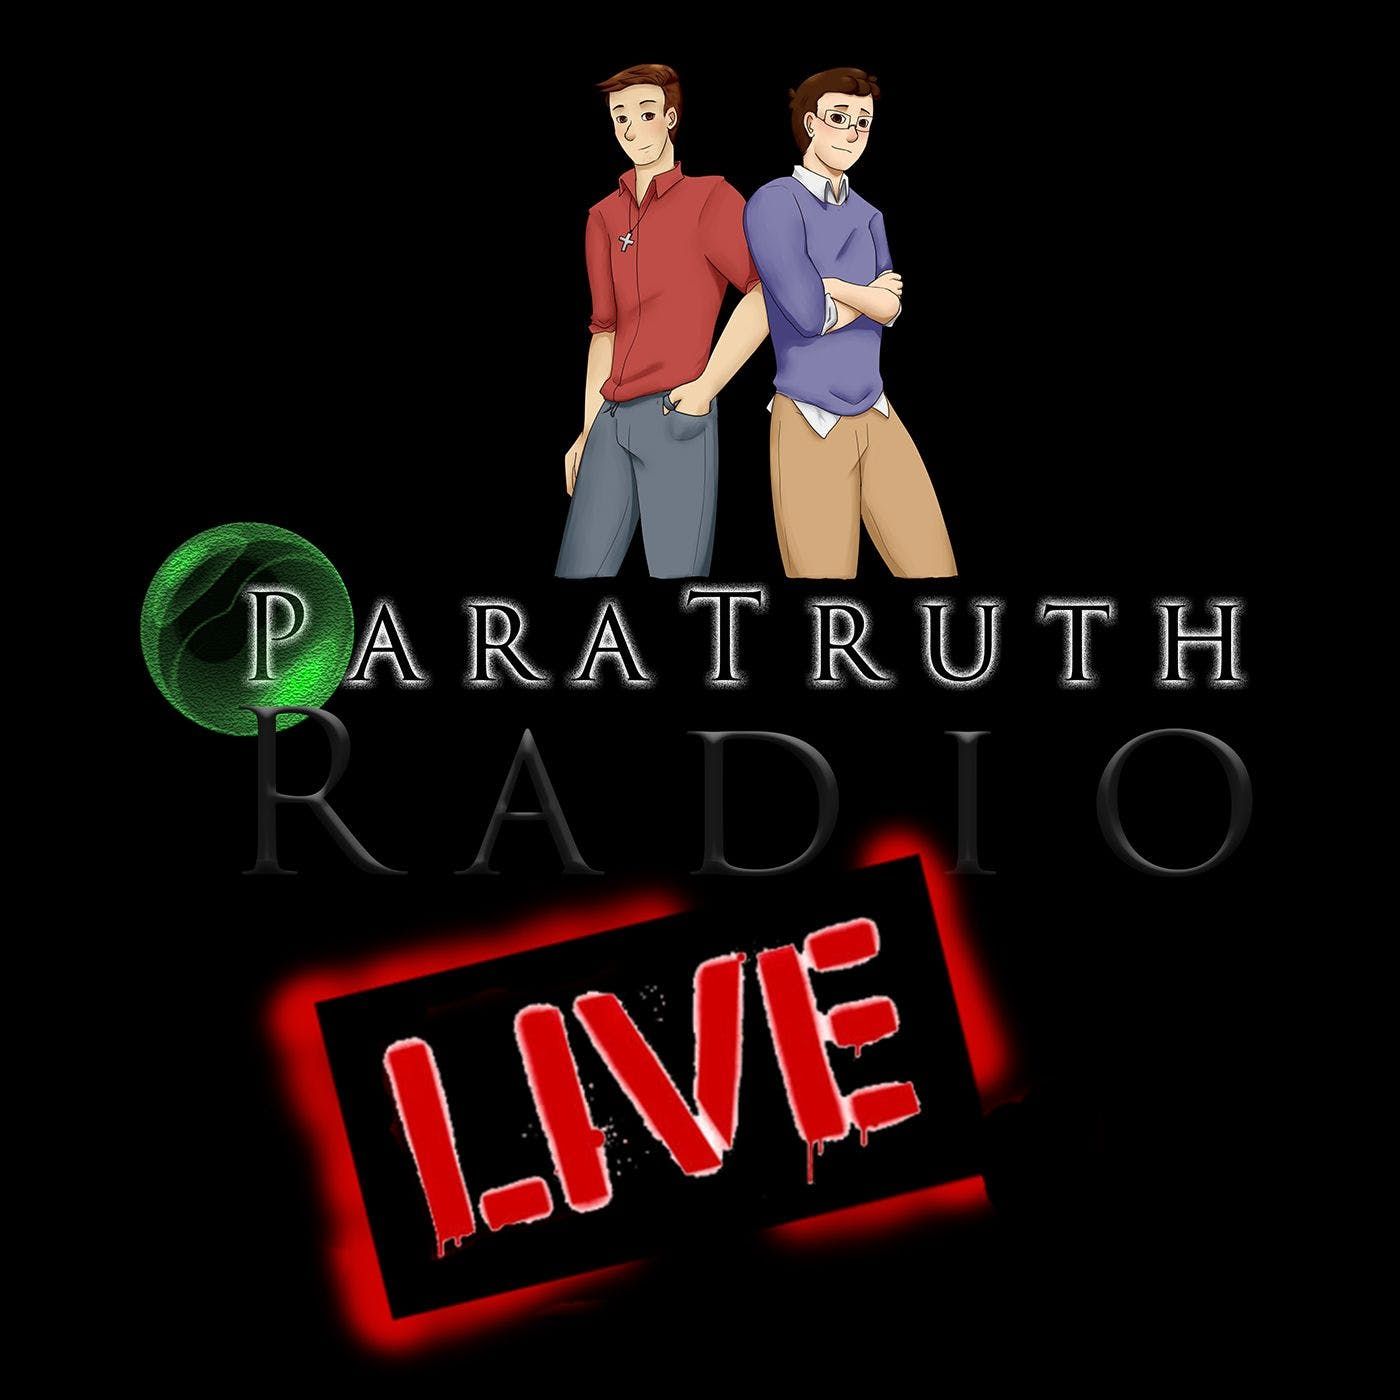 Special ParaTruth LIVE Come-Back Show